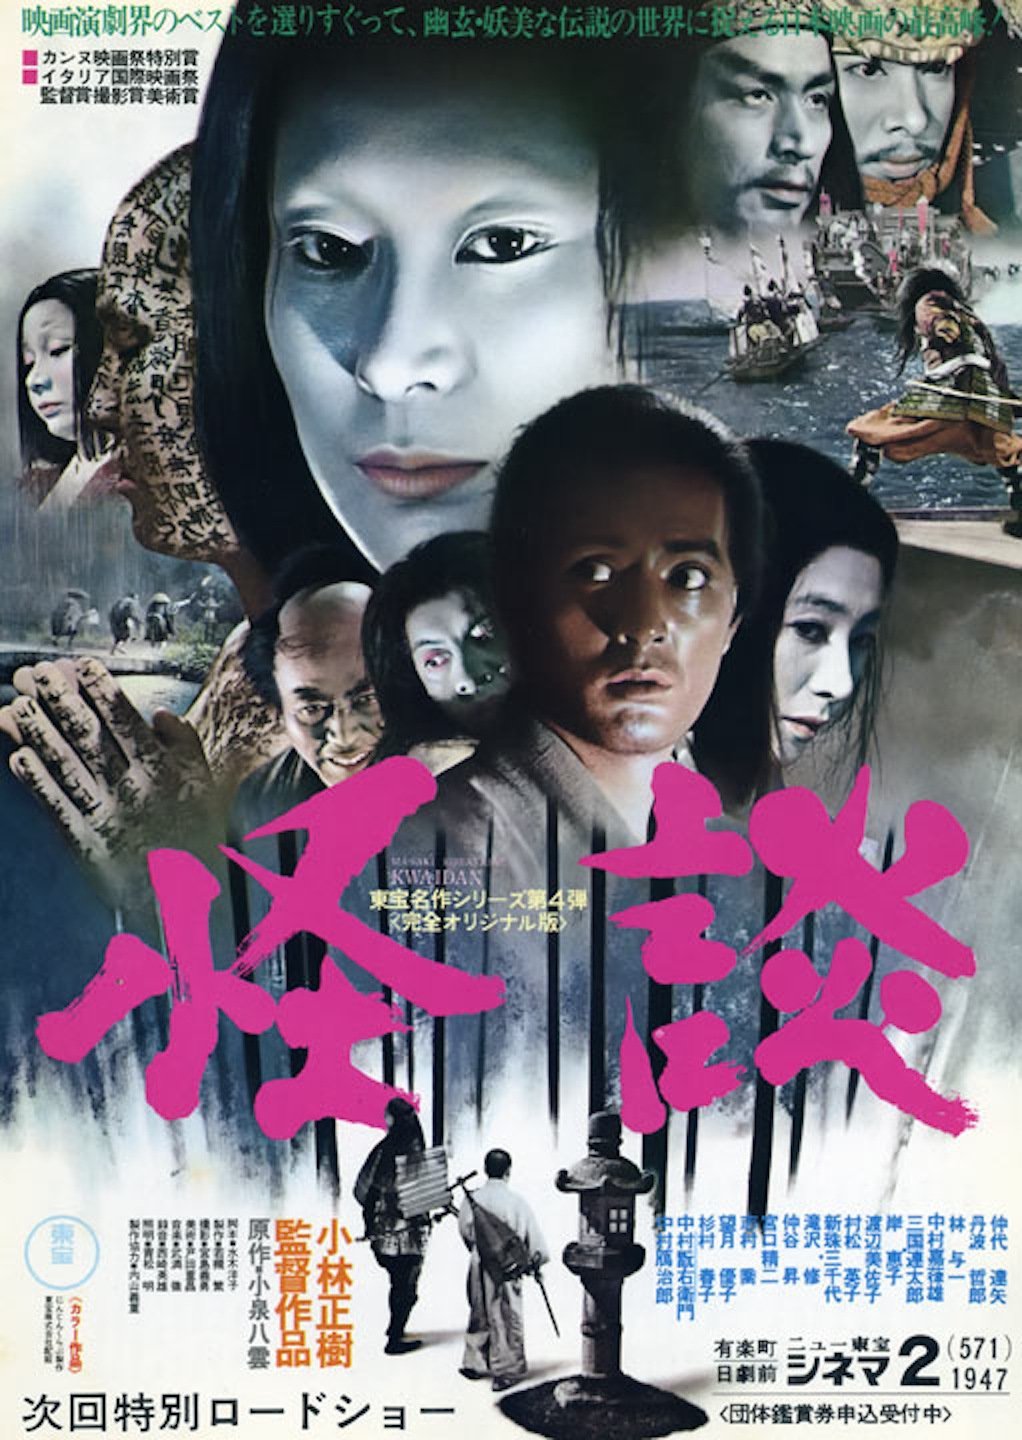 Japanese poster of the movie Kwaidan